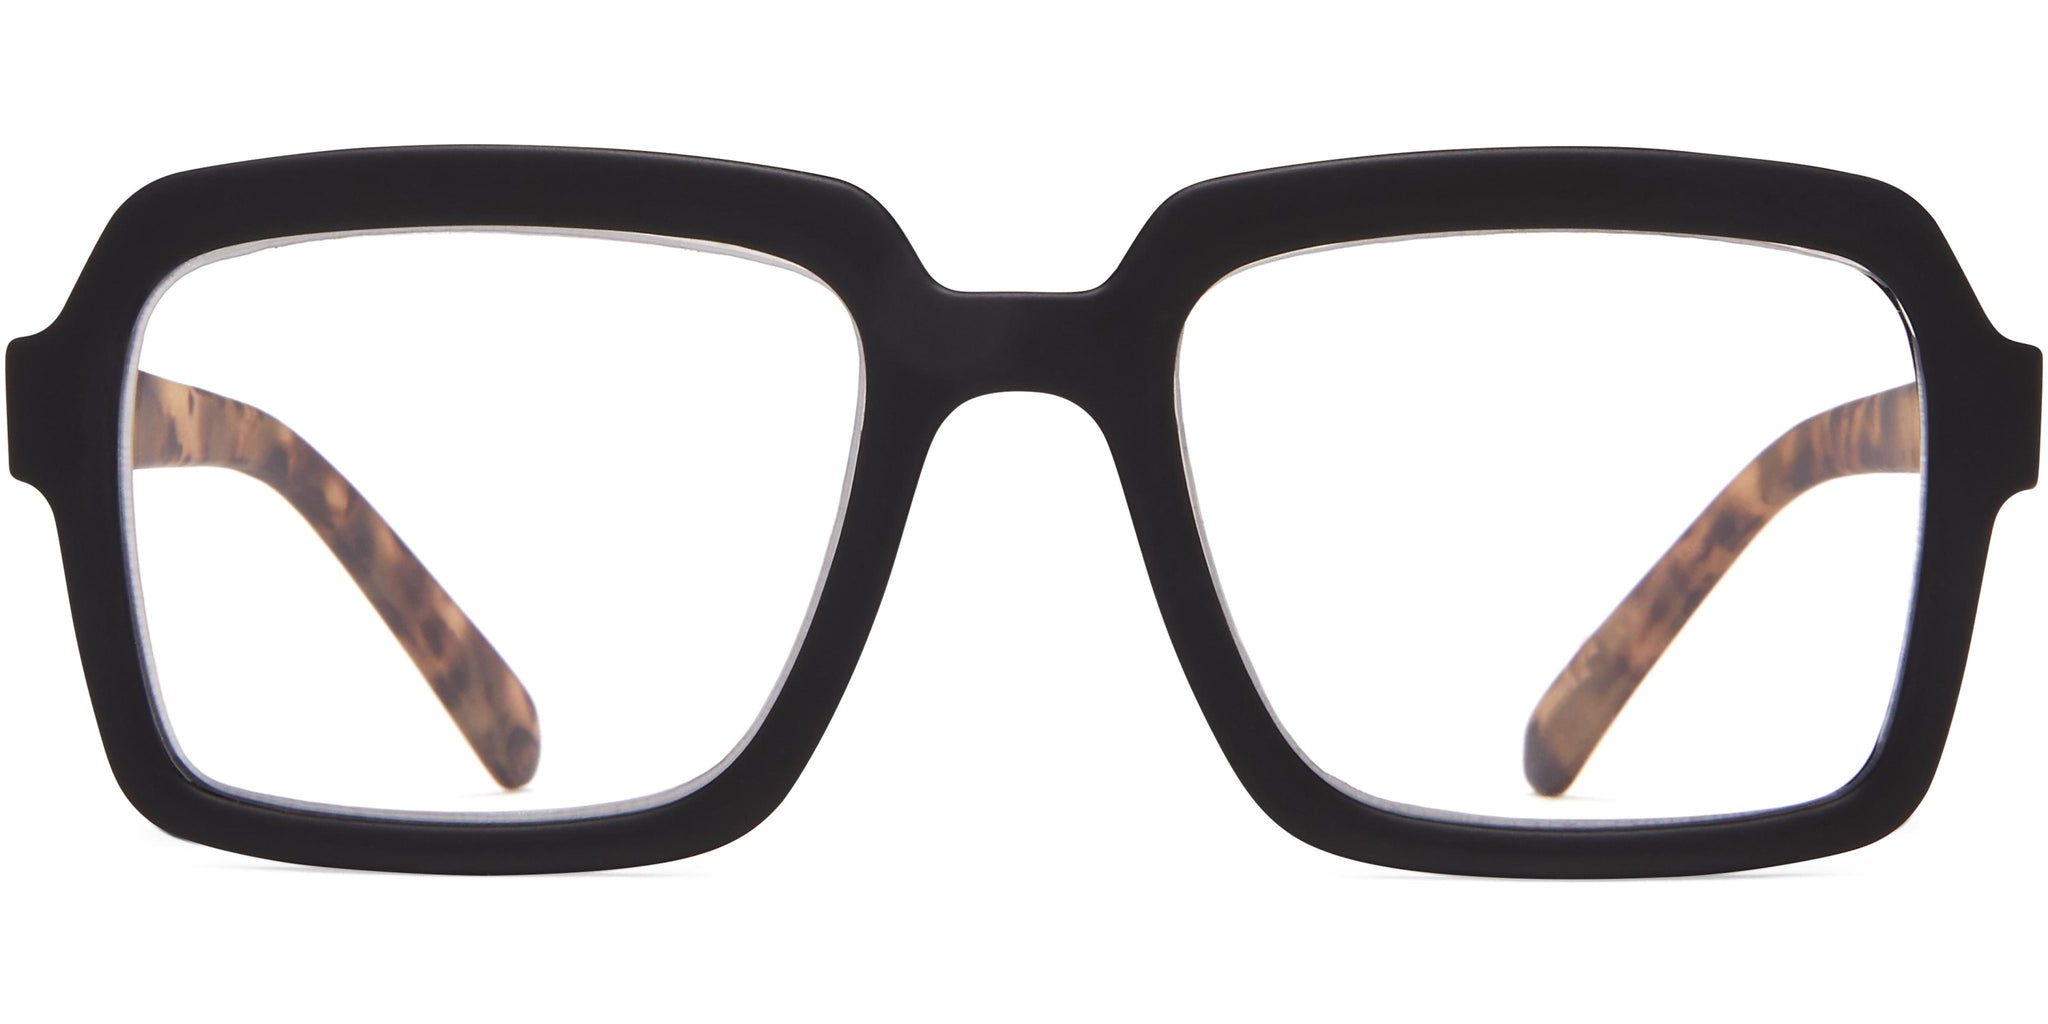 sydney reading glasses studio icu eyewear